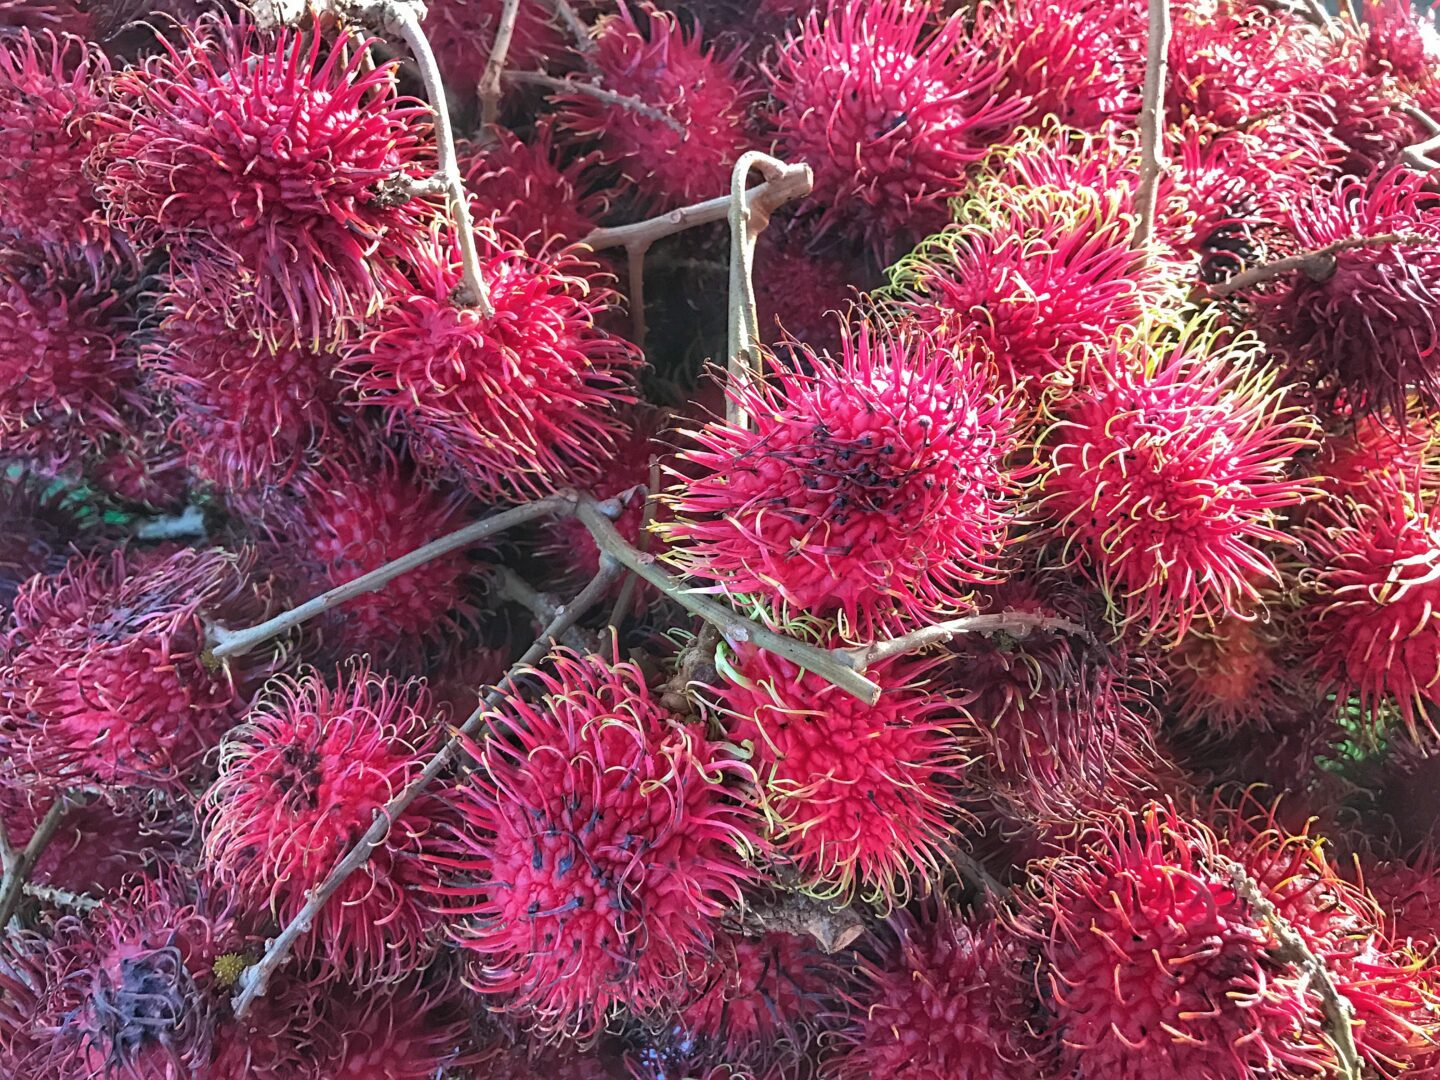 A pile of red rambutan fruit.